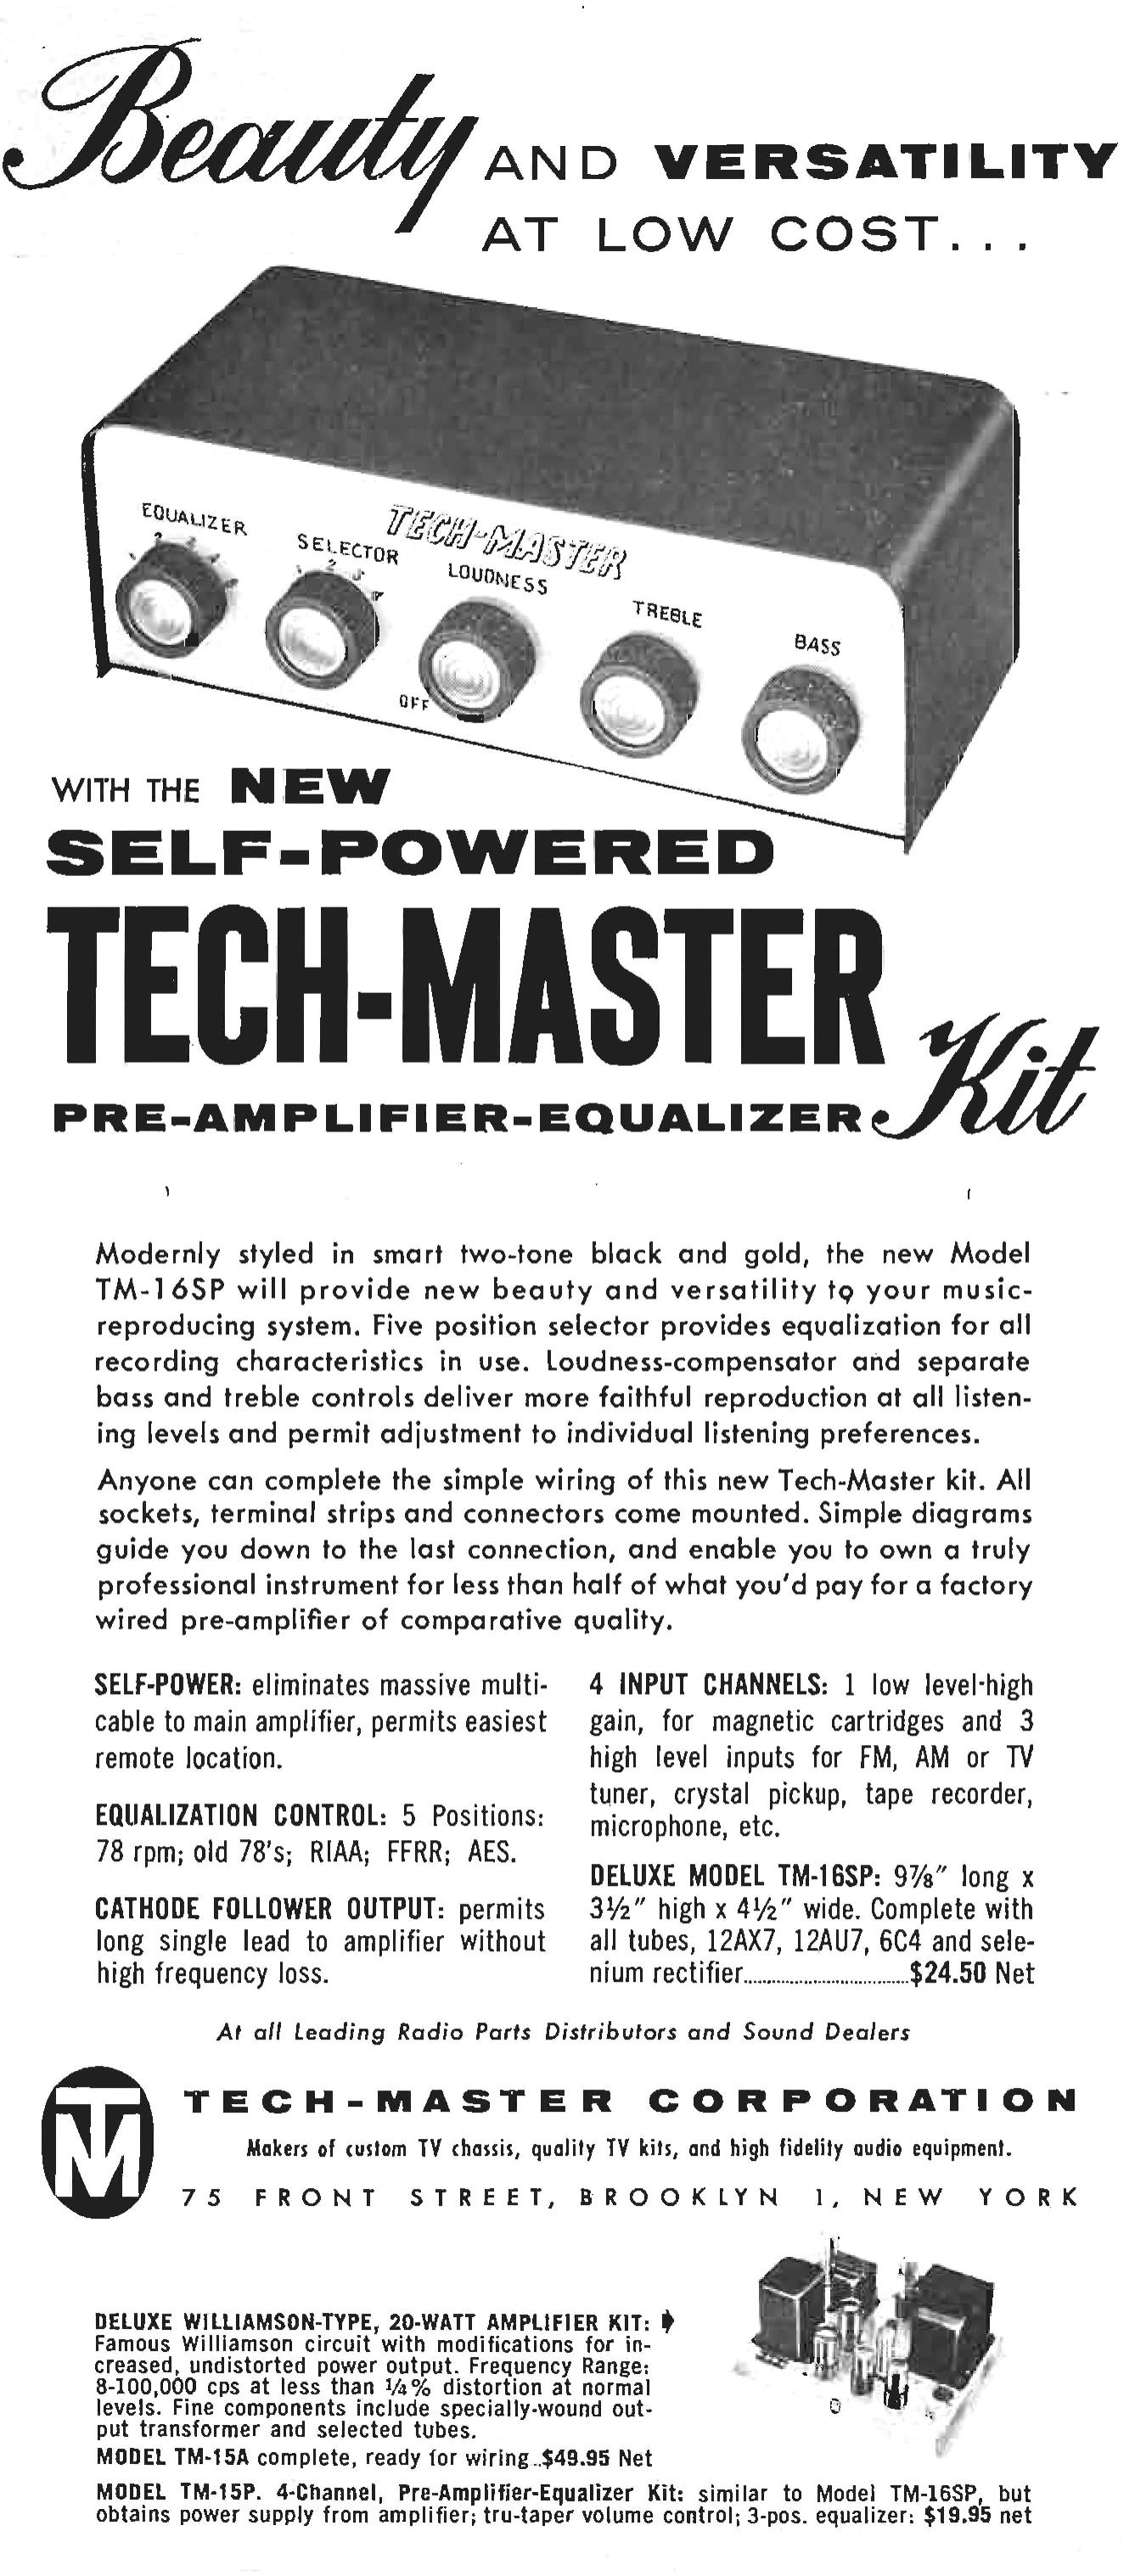 TEch-master 1955 0.jpg